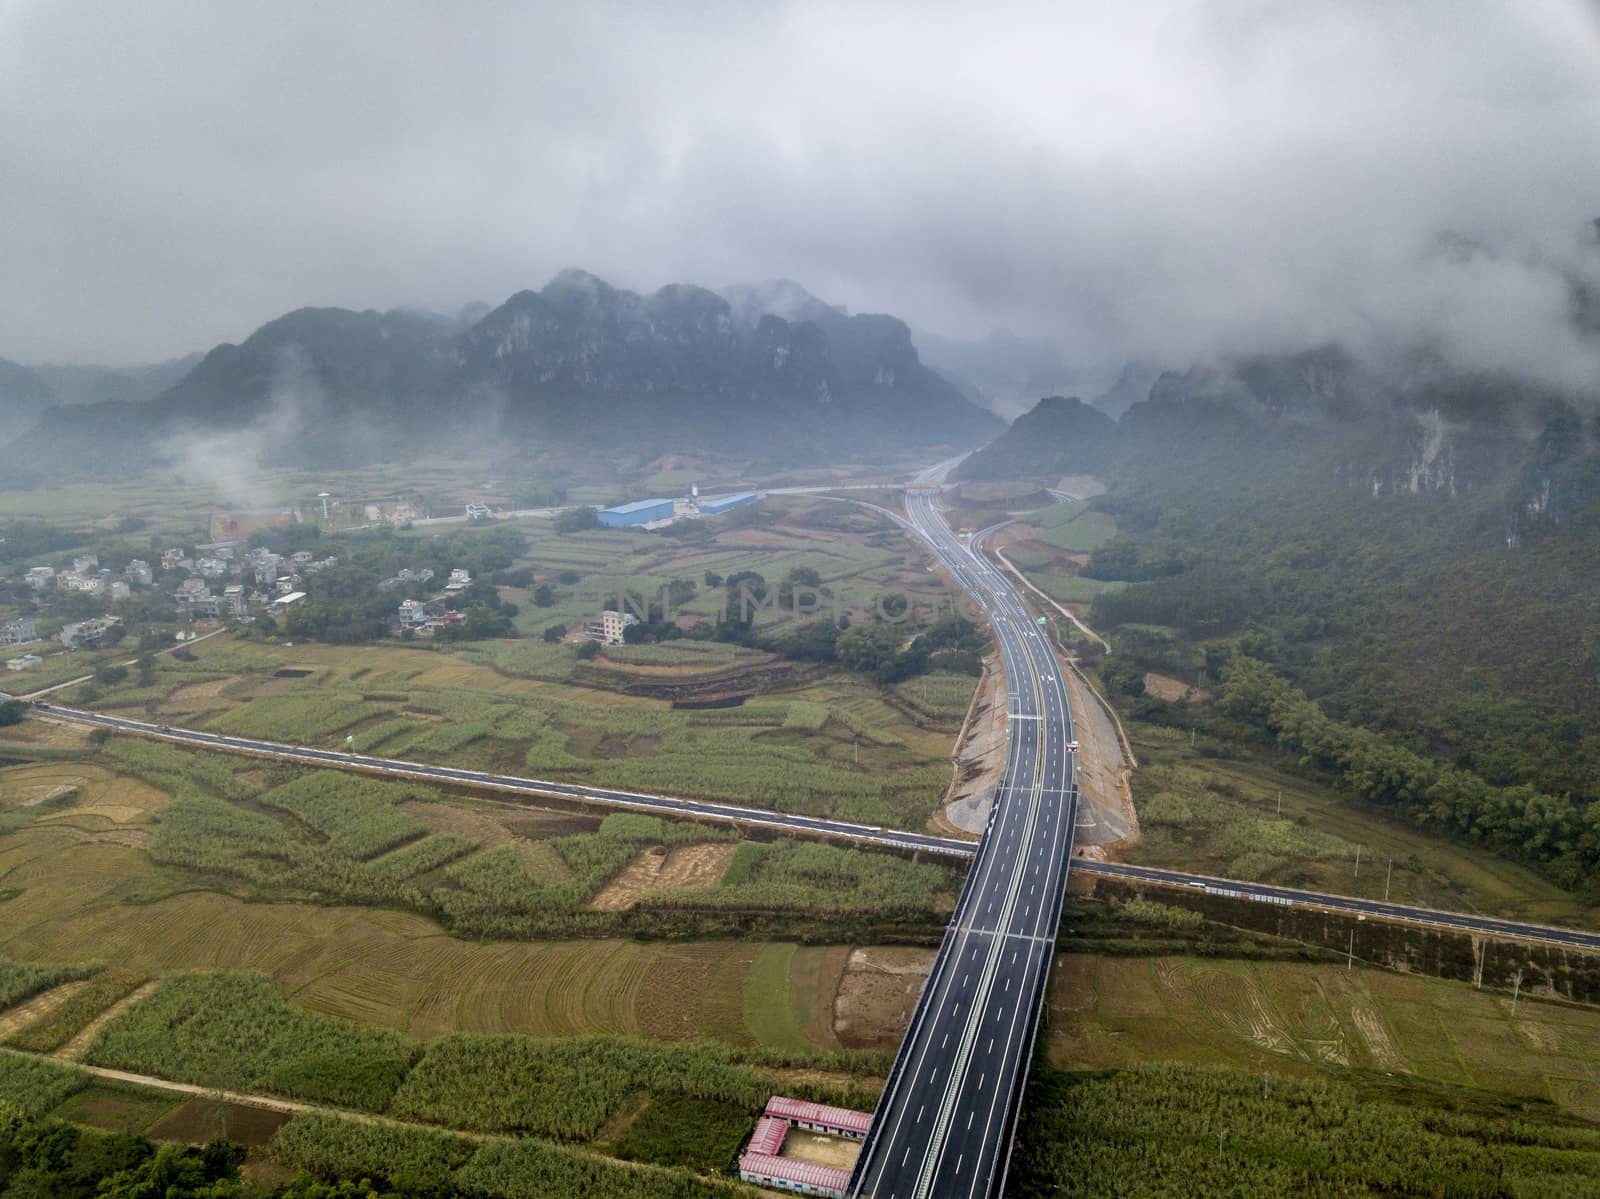 The Chongshui Expressway S62 in karst mountains of Guangxi, China.